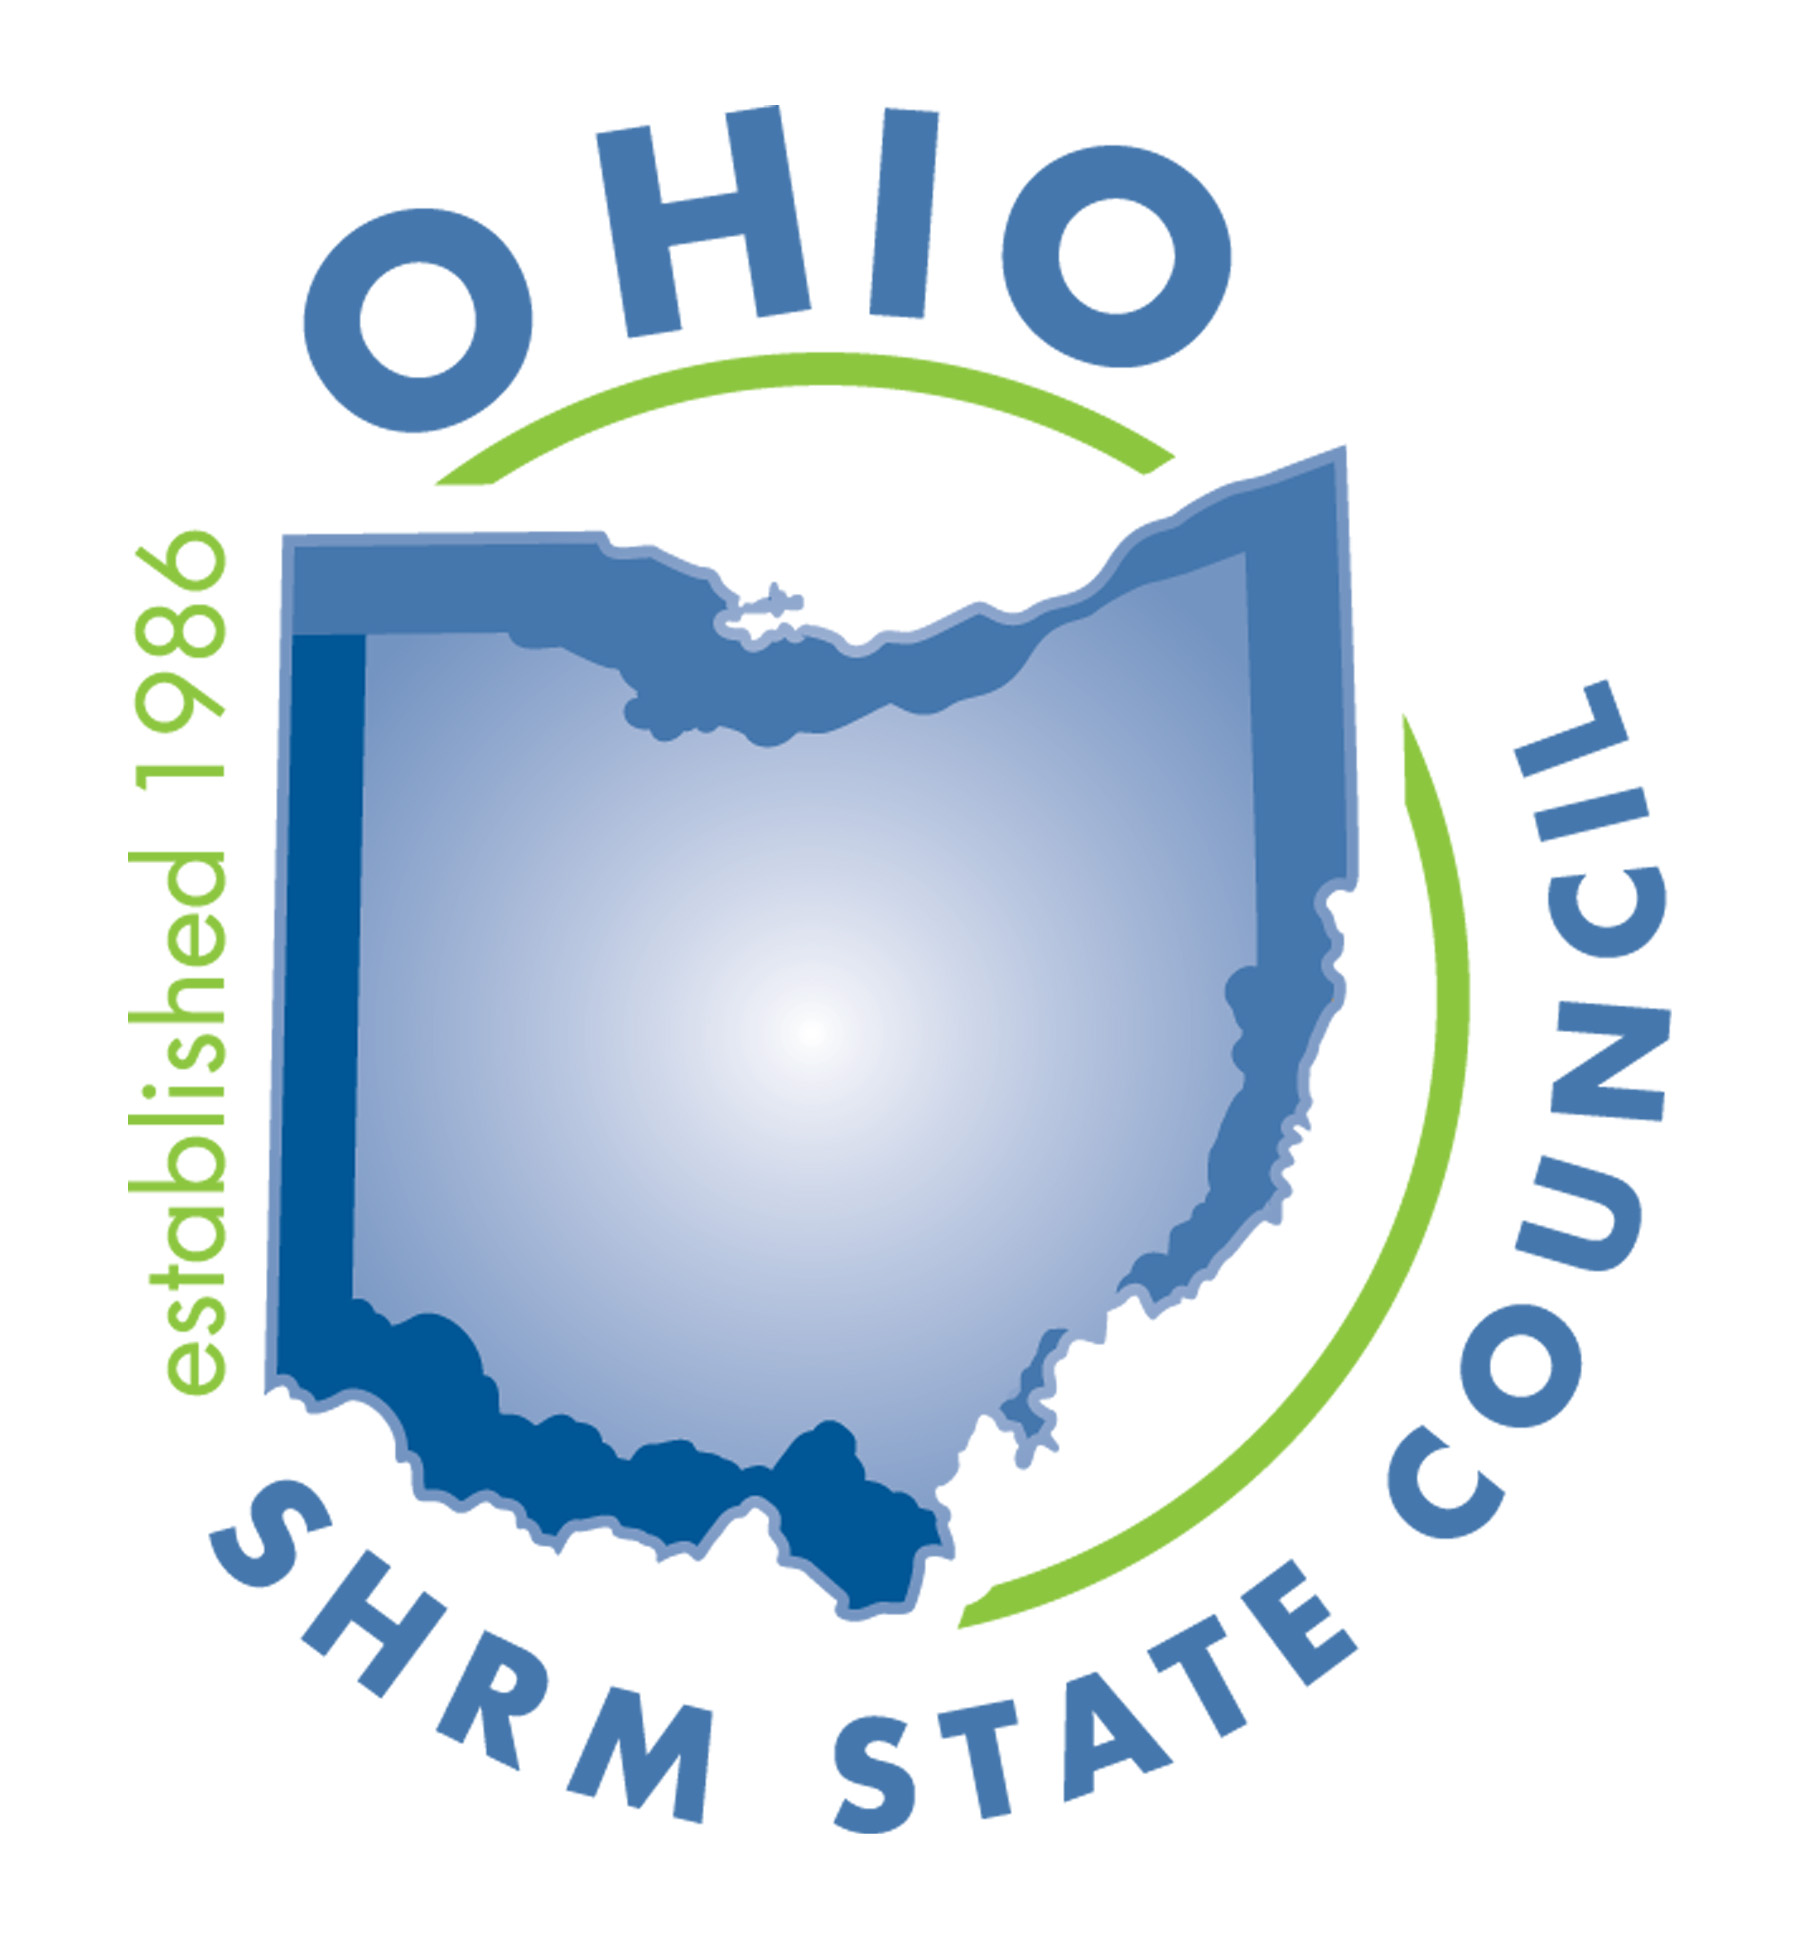 Cleveland ohio human resource jobs